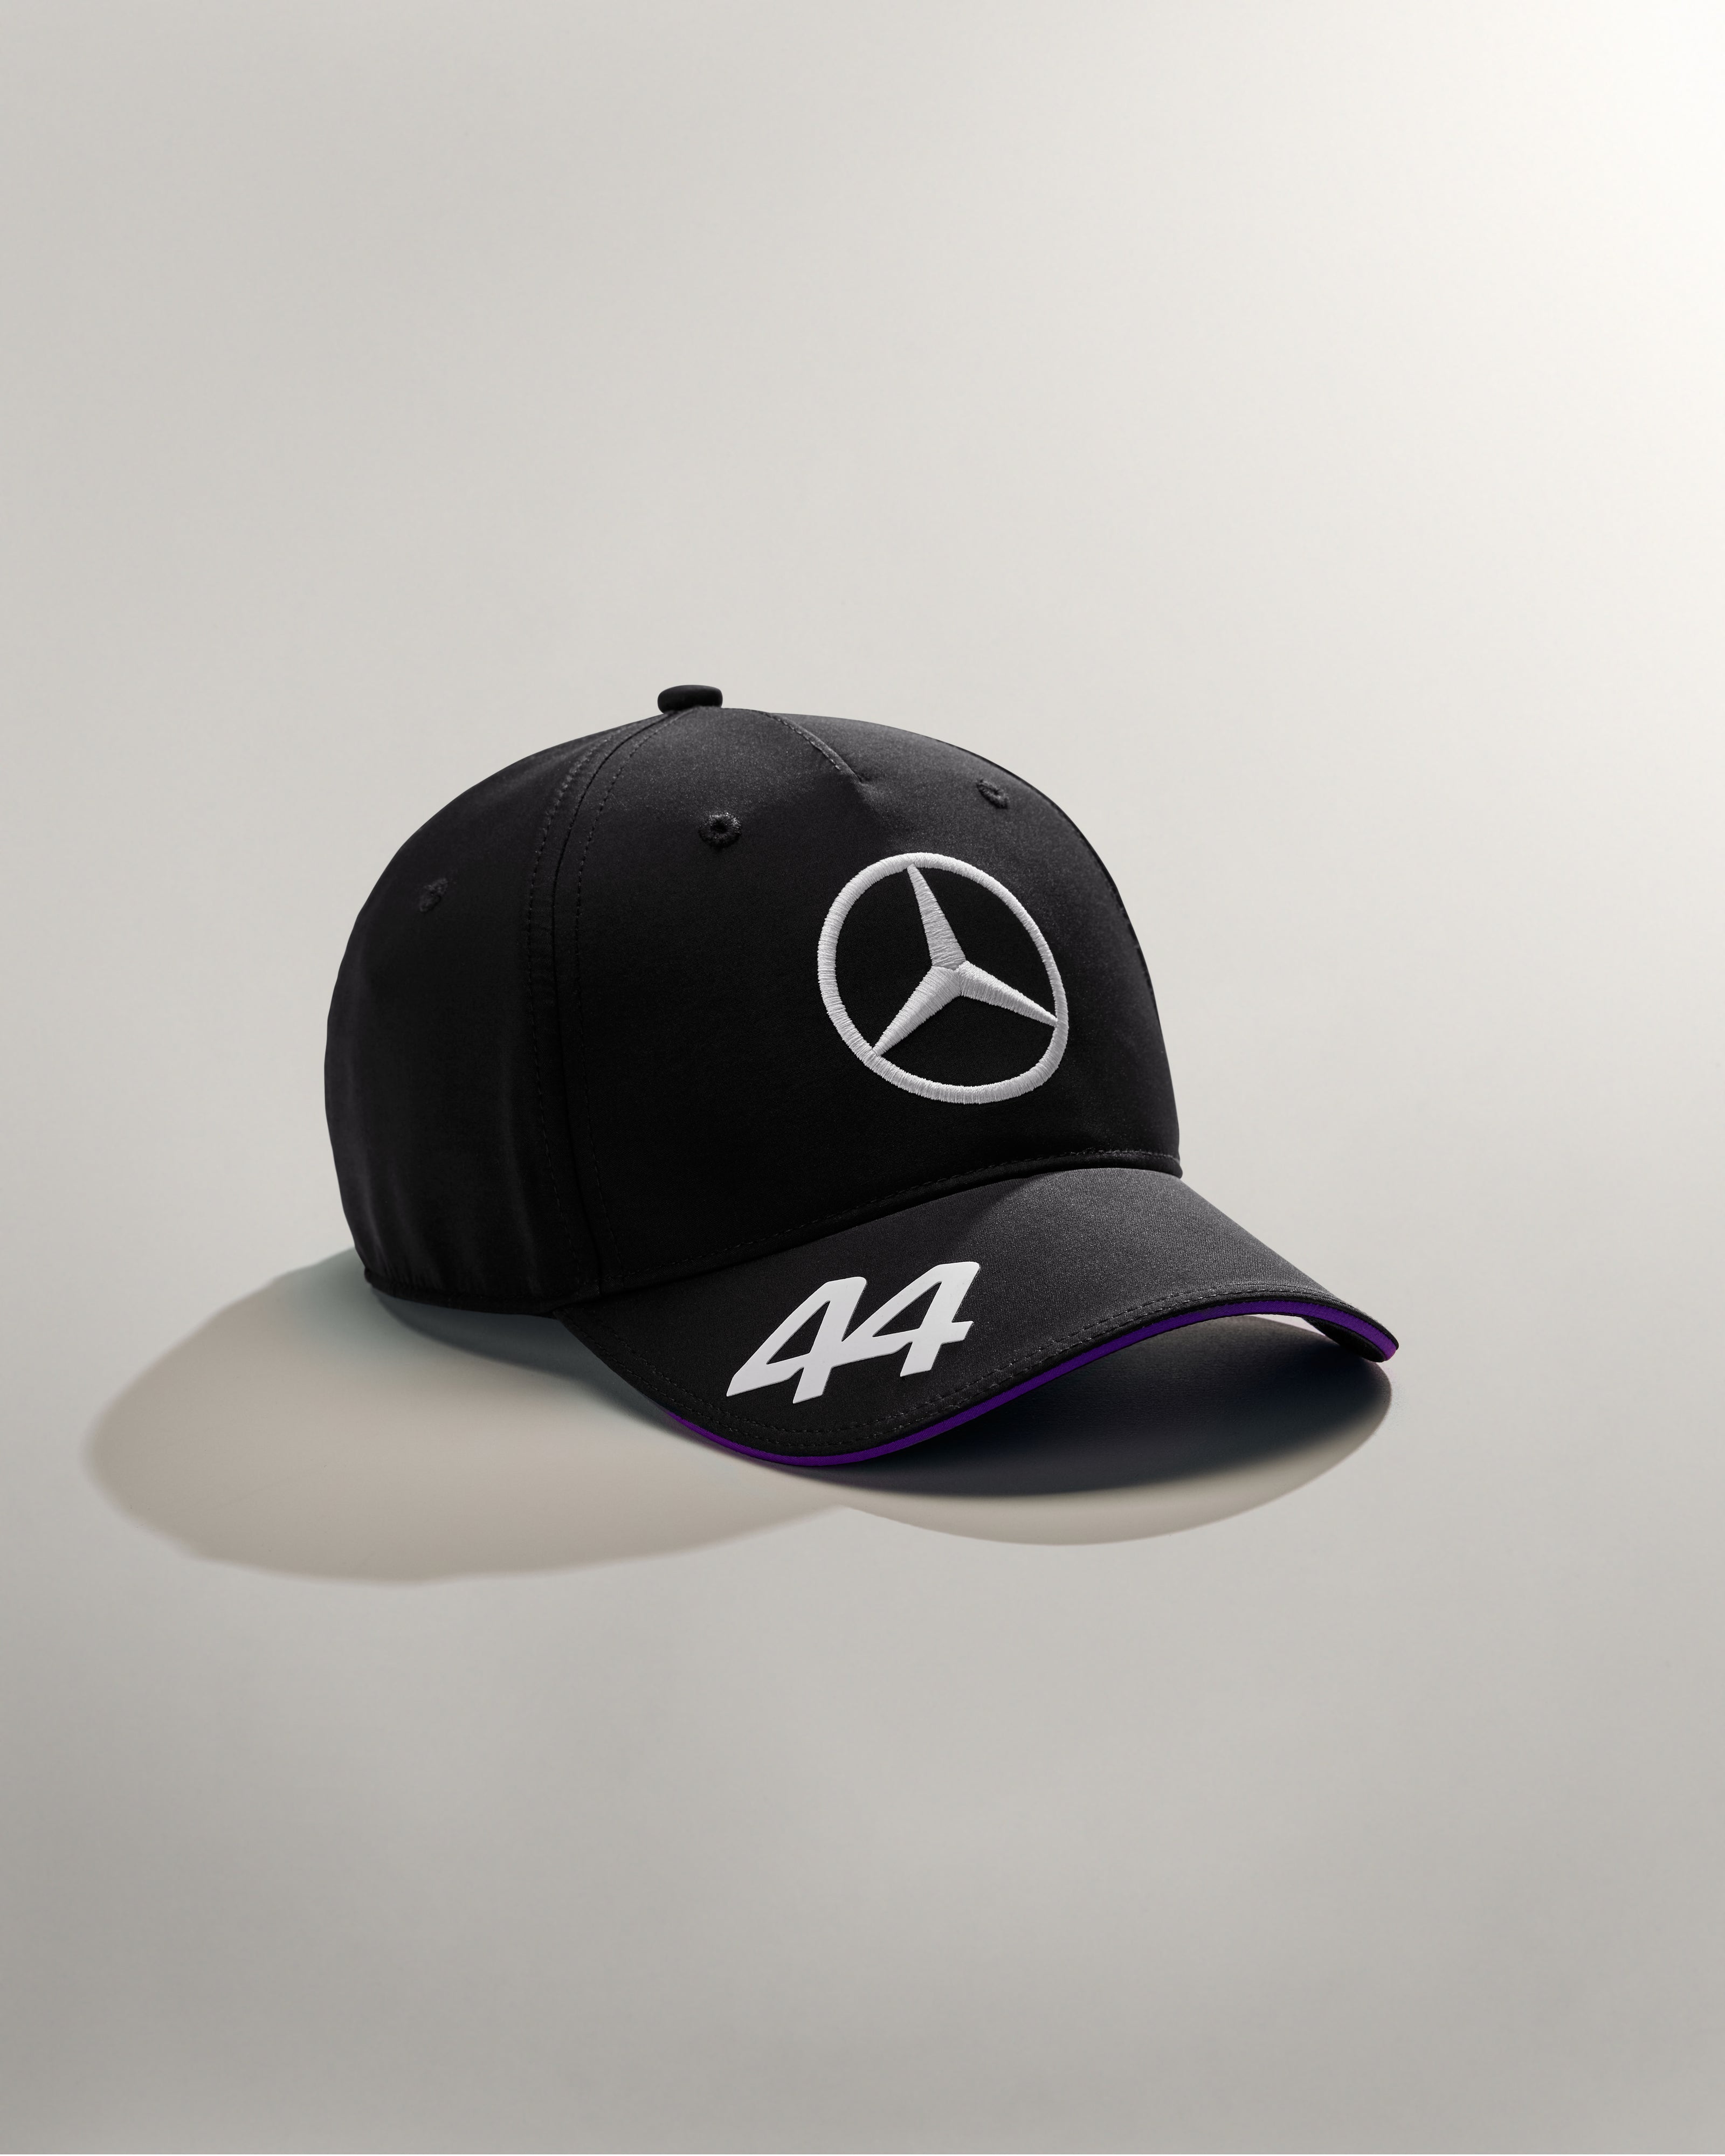 Lewis Hamilton Caps & Hats | Official Mercedes-AMG F1 Store